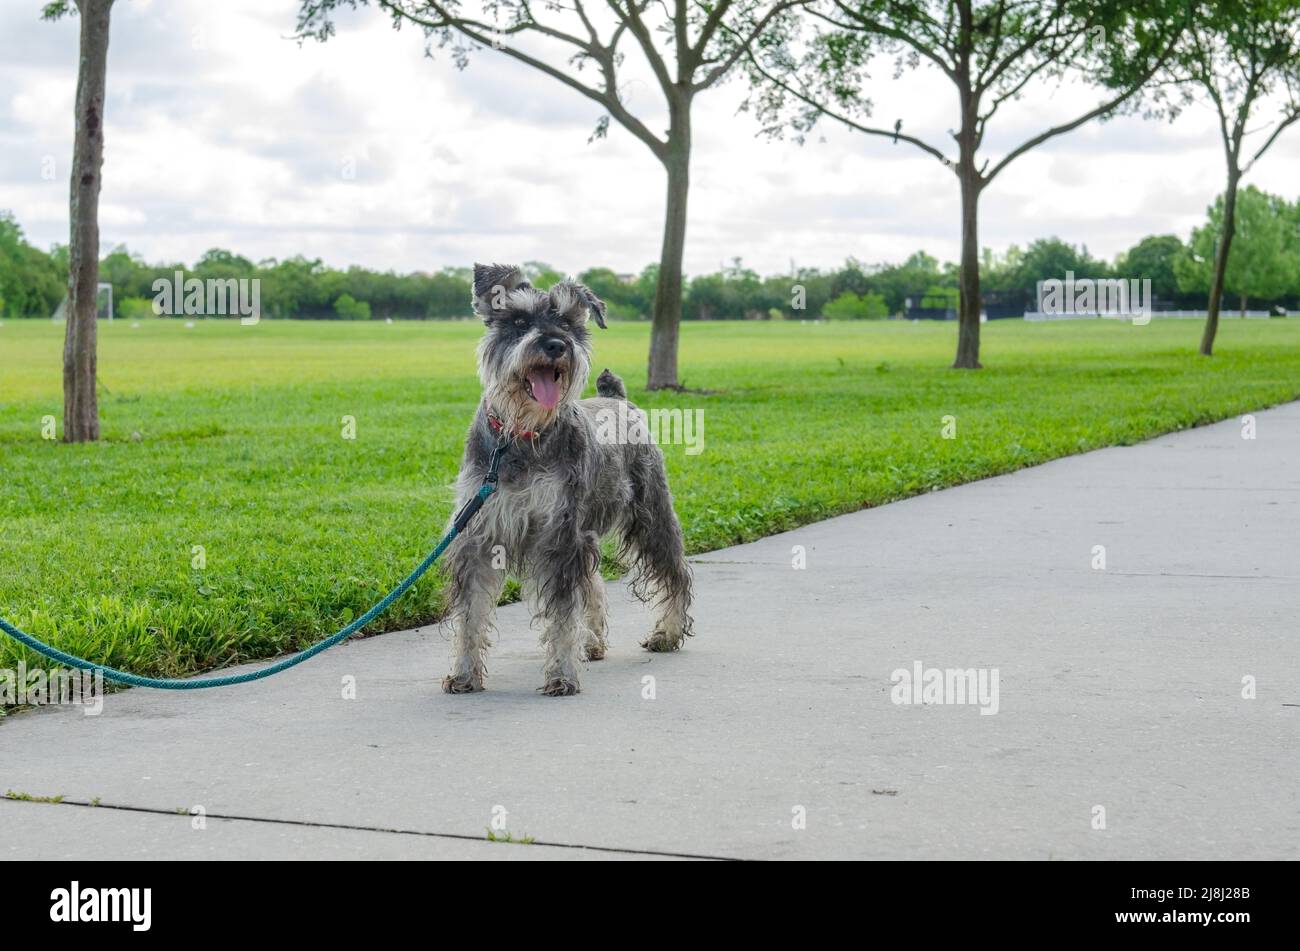 One Schnauzer dog on leash outside, park, on sidewalk, green grass, trees Stock Photo